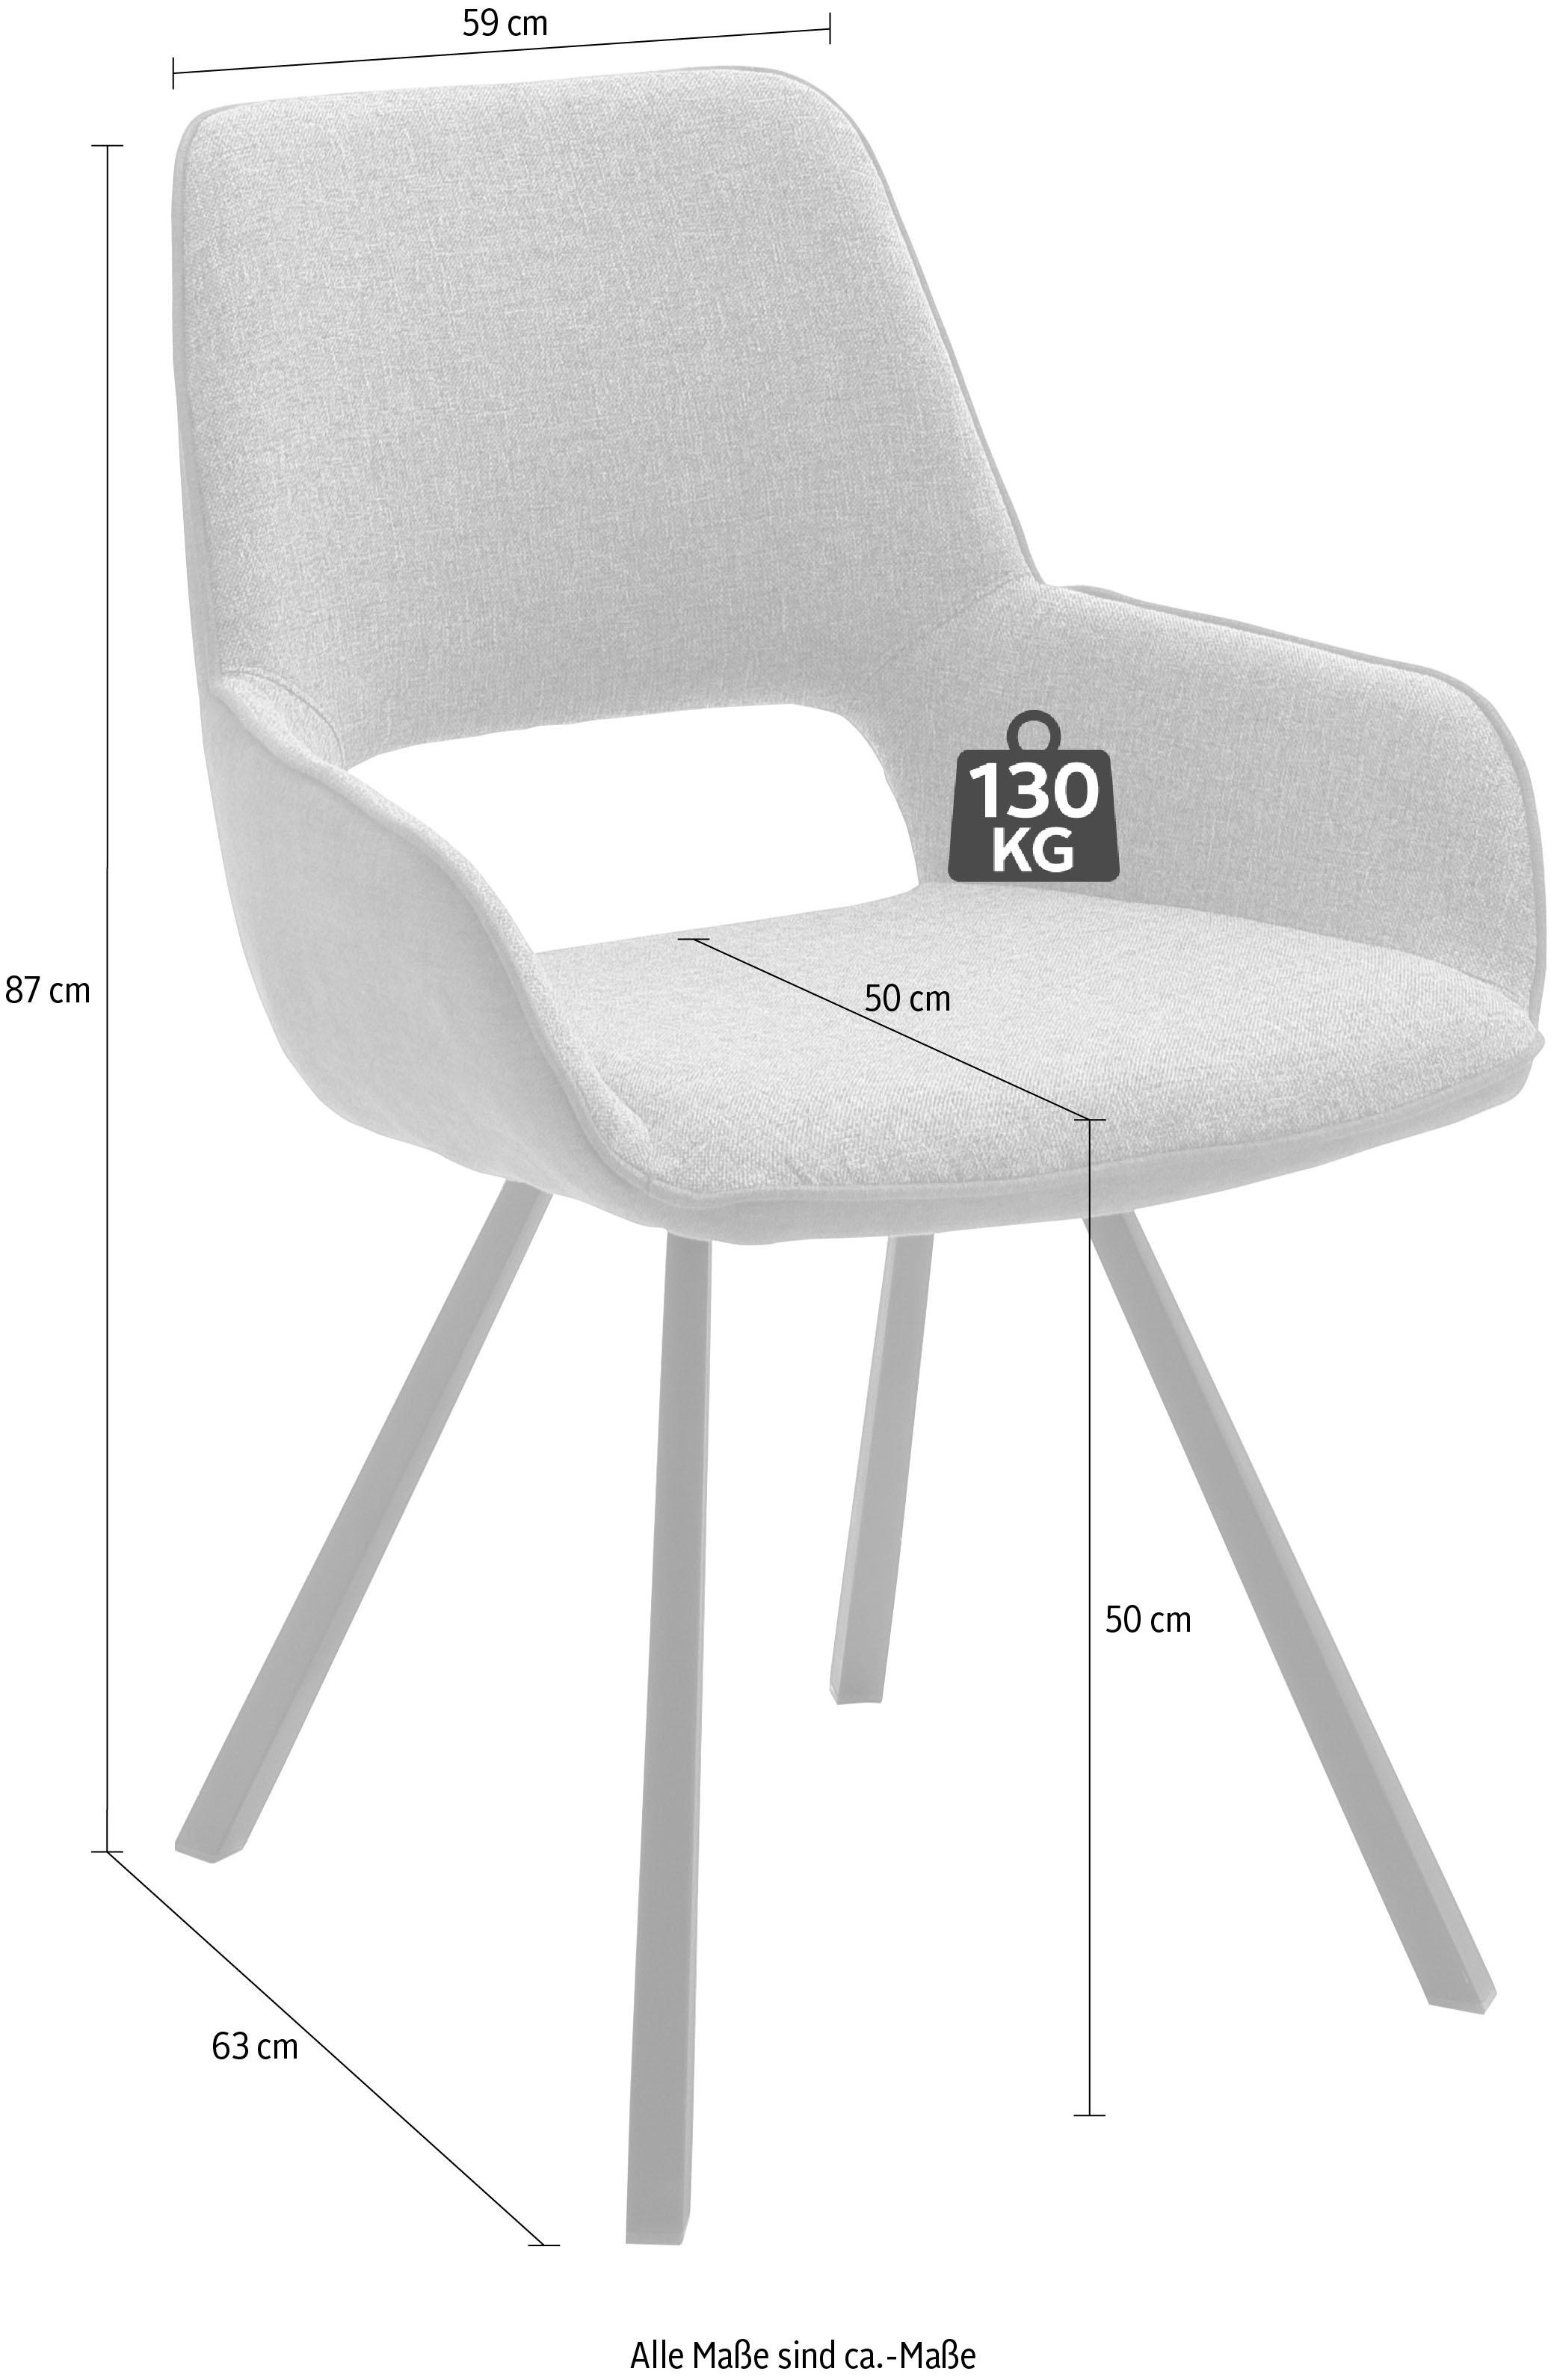 MCA furniture 4-Fussstuhl »Parana«, (Set), bis bas prix Stuhl St., 120 à Kg belastbar 2